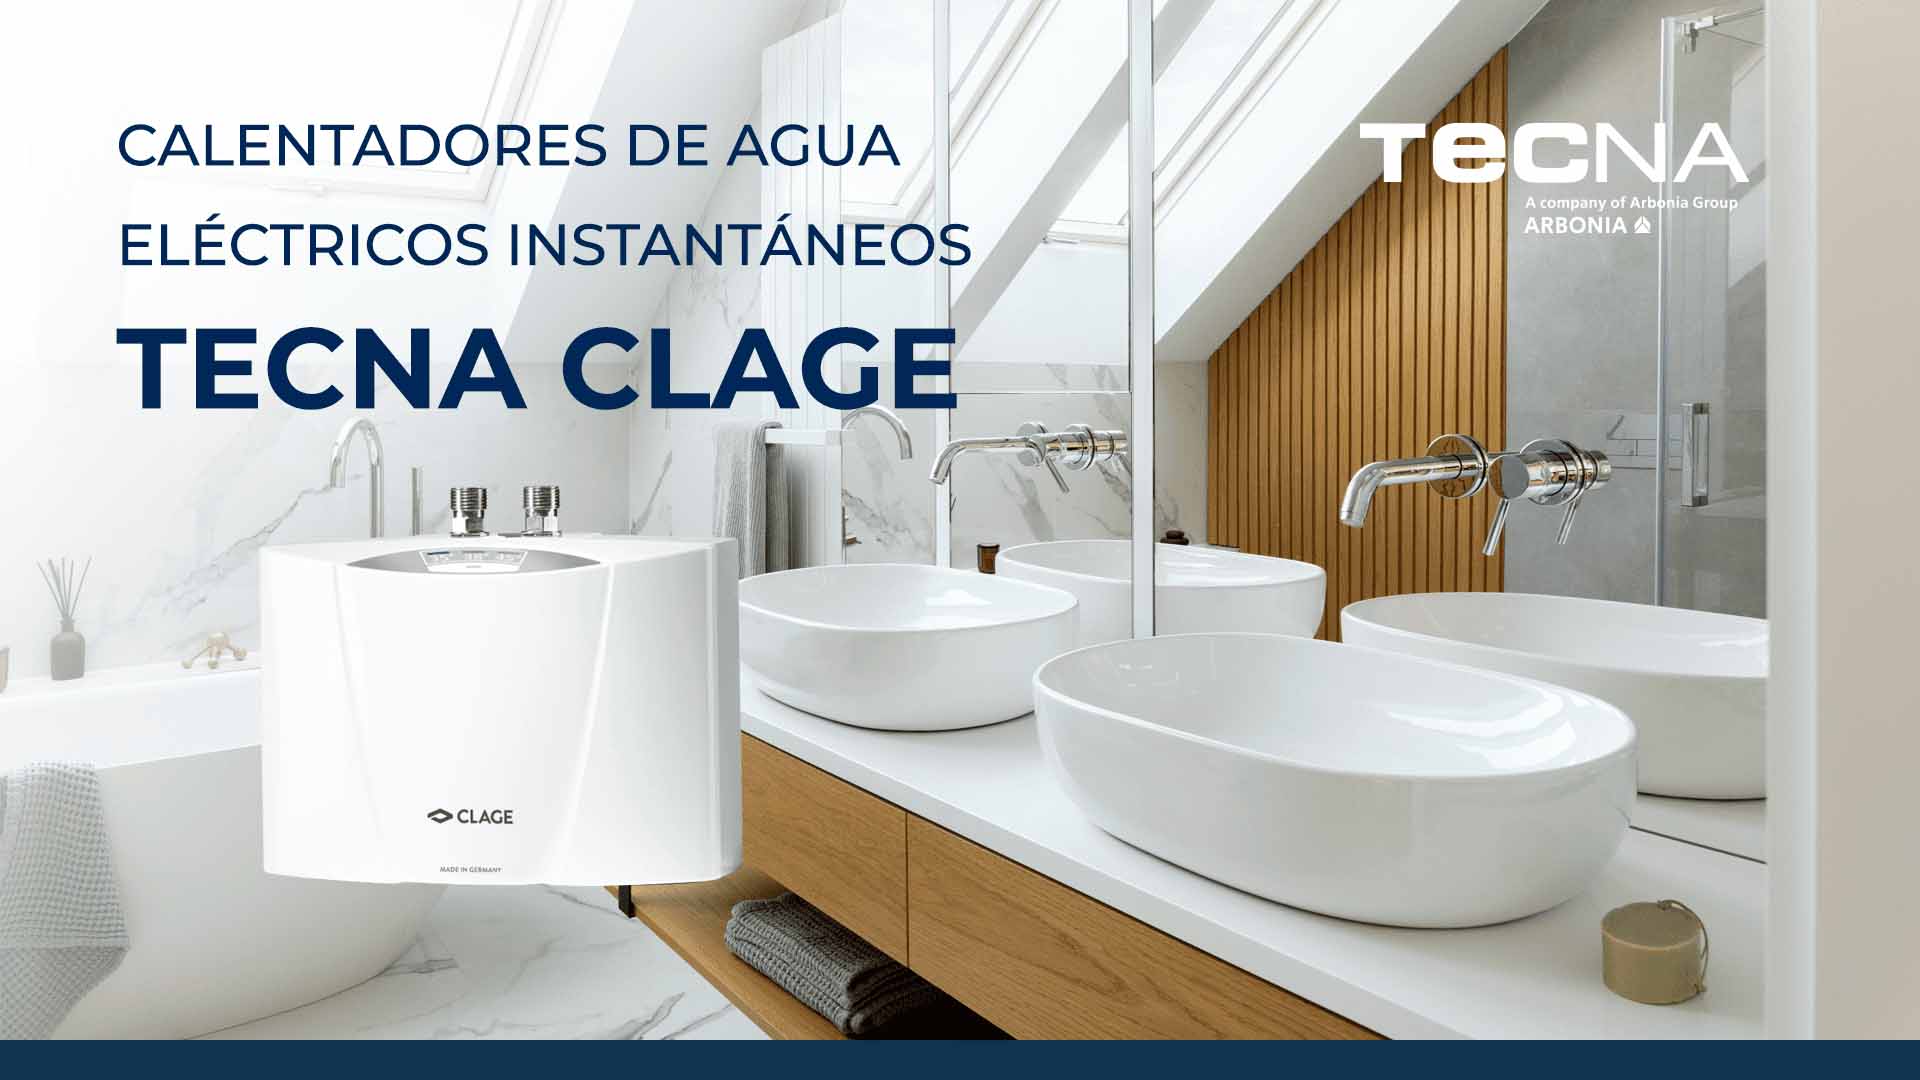 Calentadores eléctricos instantáneos de agua TECNA CLAGE MBH - Tecna